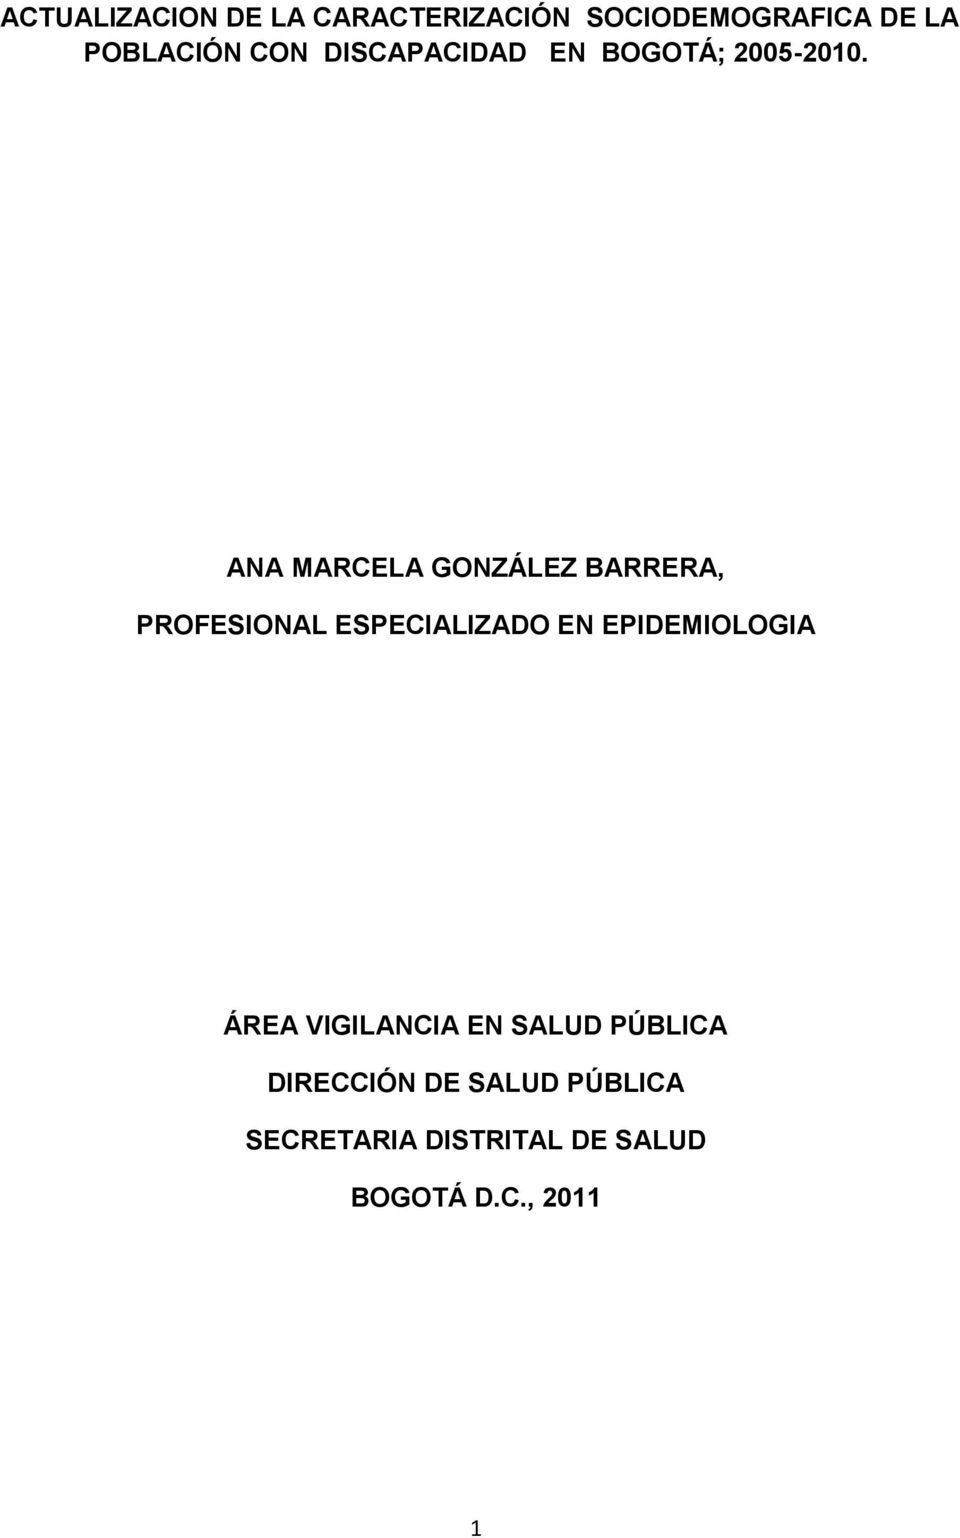 ANA MARCELA GONZÁLEZ BARRERA, PROFESIONAL ESPECIALIZADO EN EPIDEMIOLOGIA